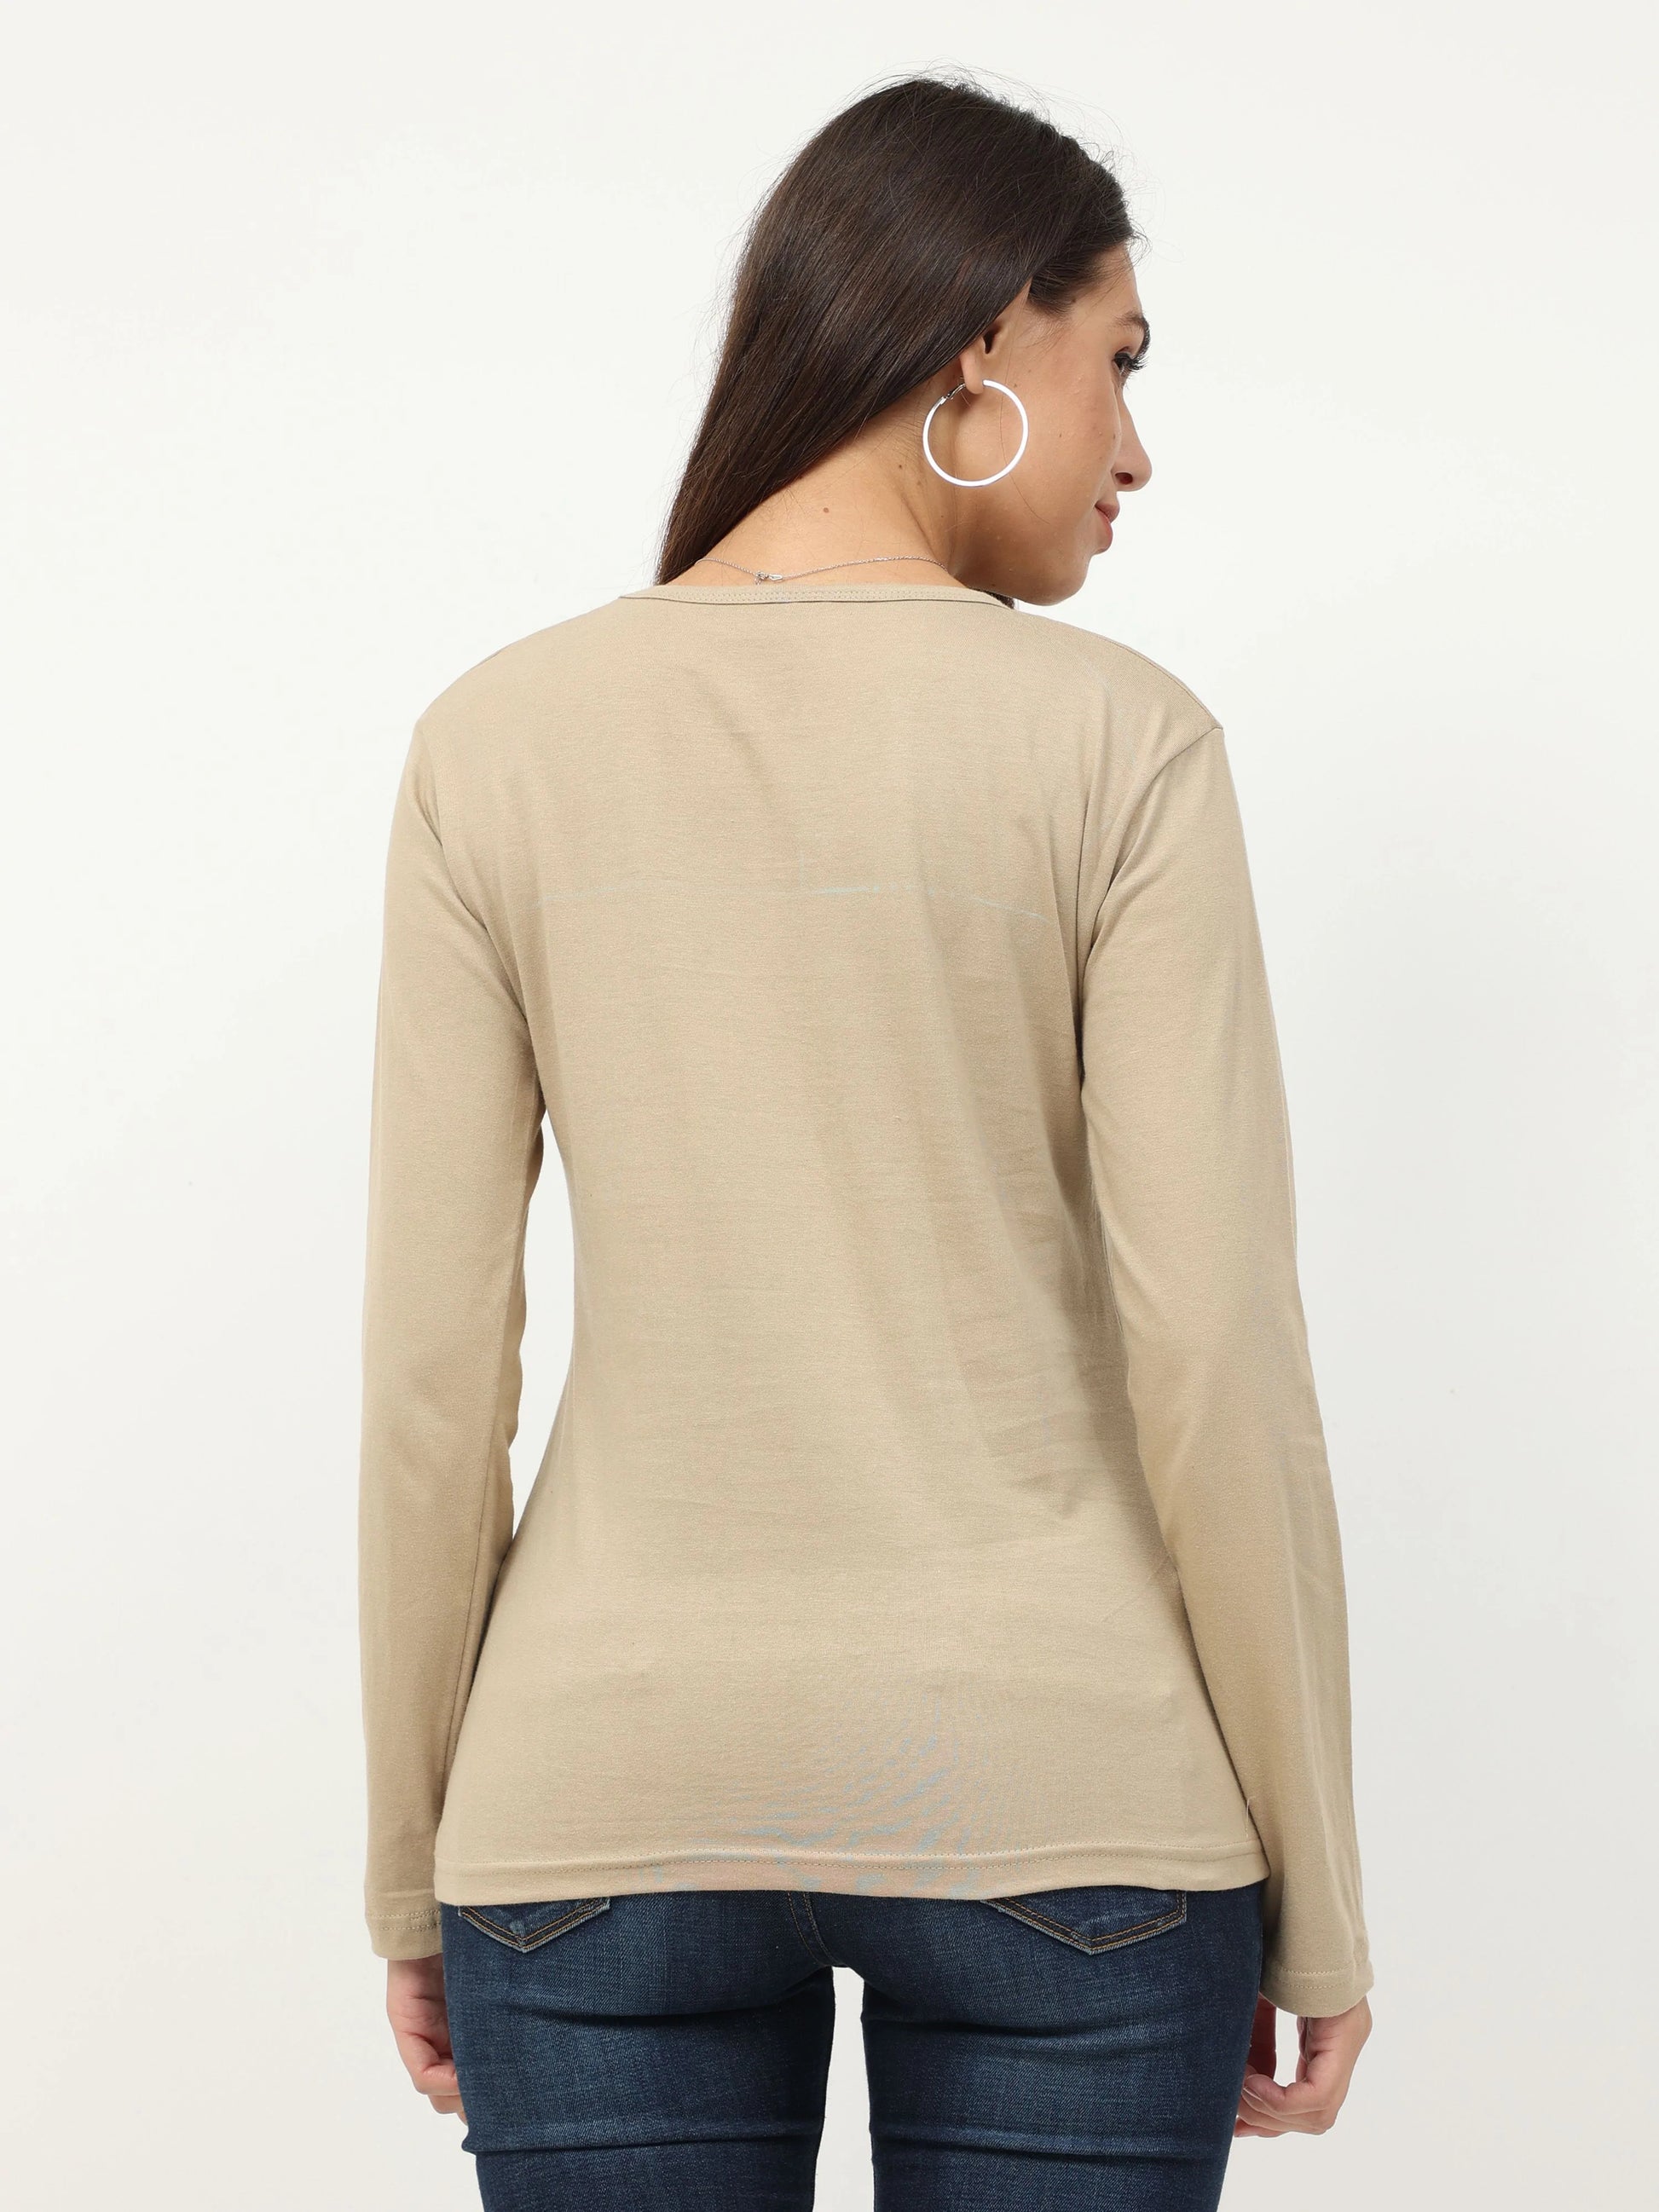 Fleximaa Women's Cotton Plain V Neck Full Sleeve T-Shirt - fleximaa-so